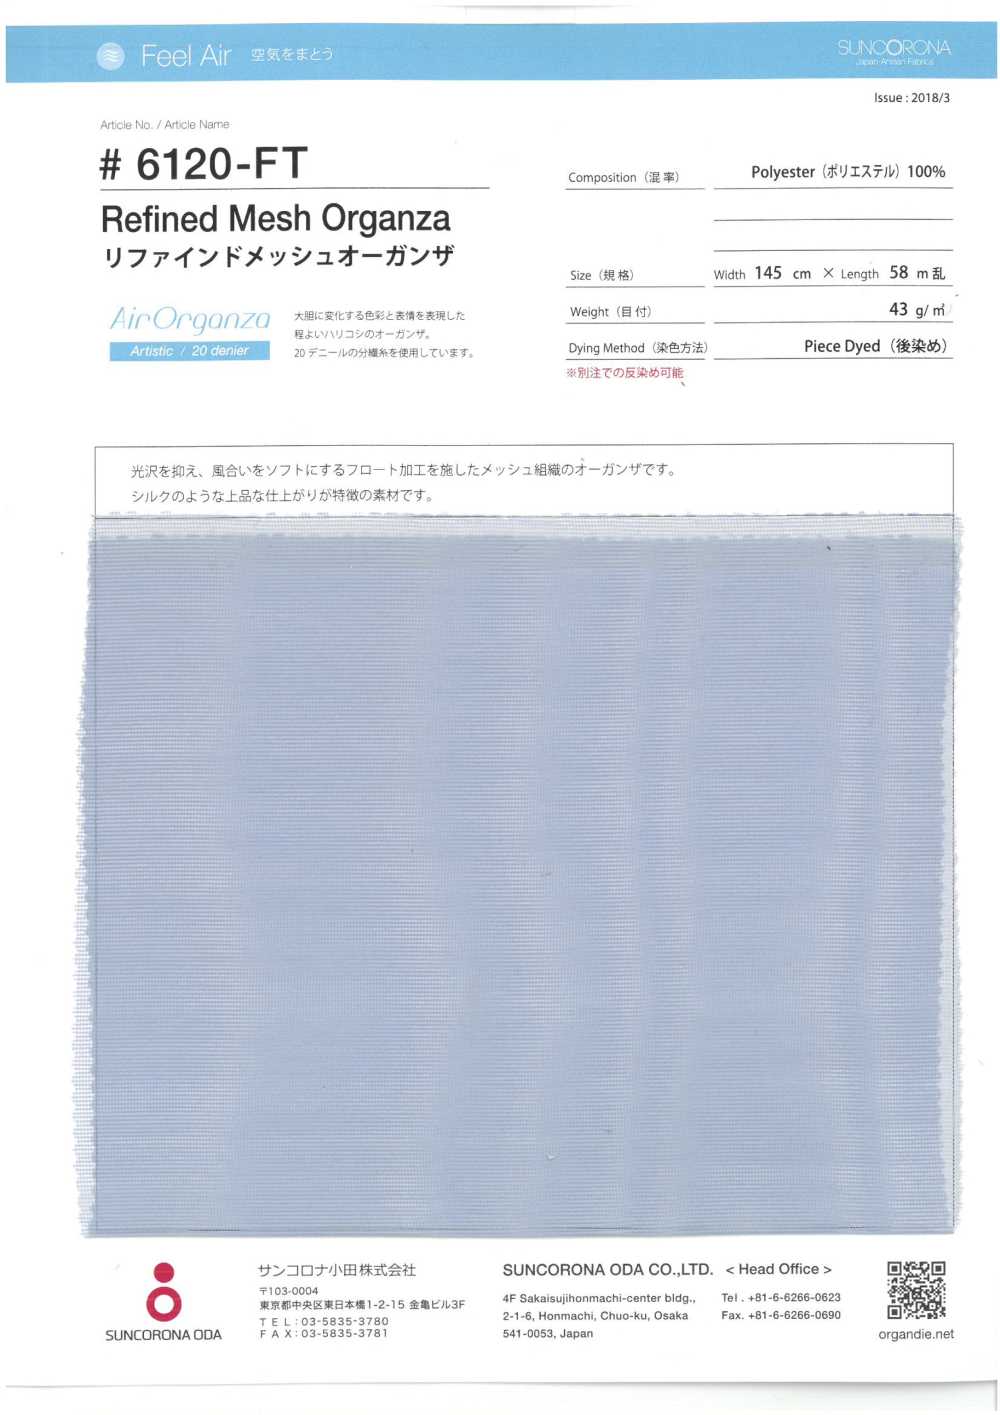 6120-FT Raffiniertes Mesh-Organza[Textilgewebe] Suncorona Oda